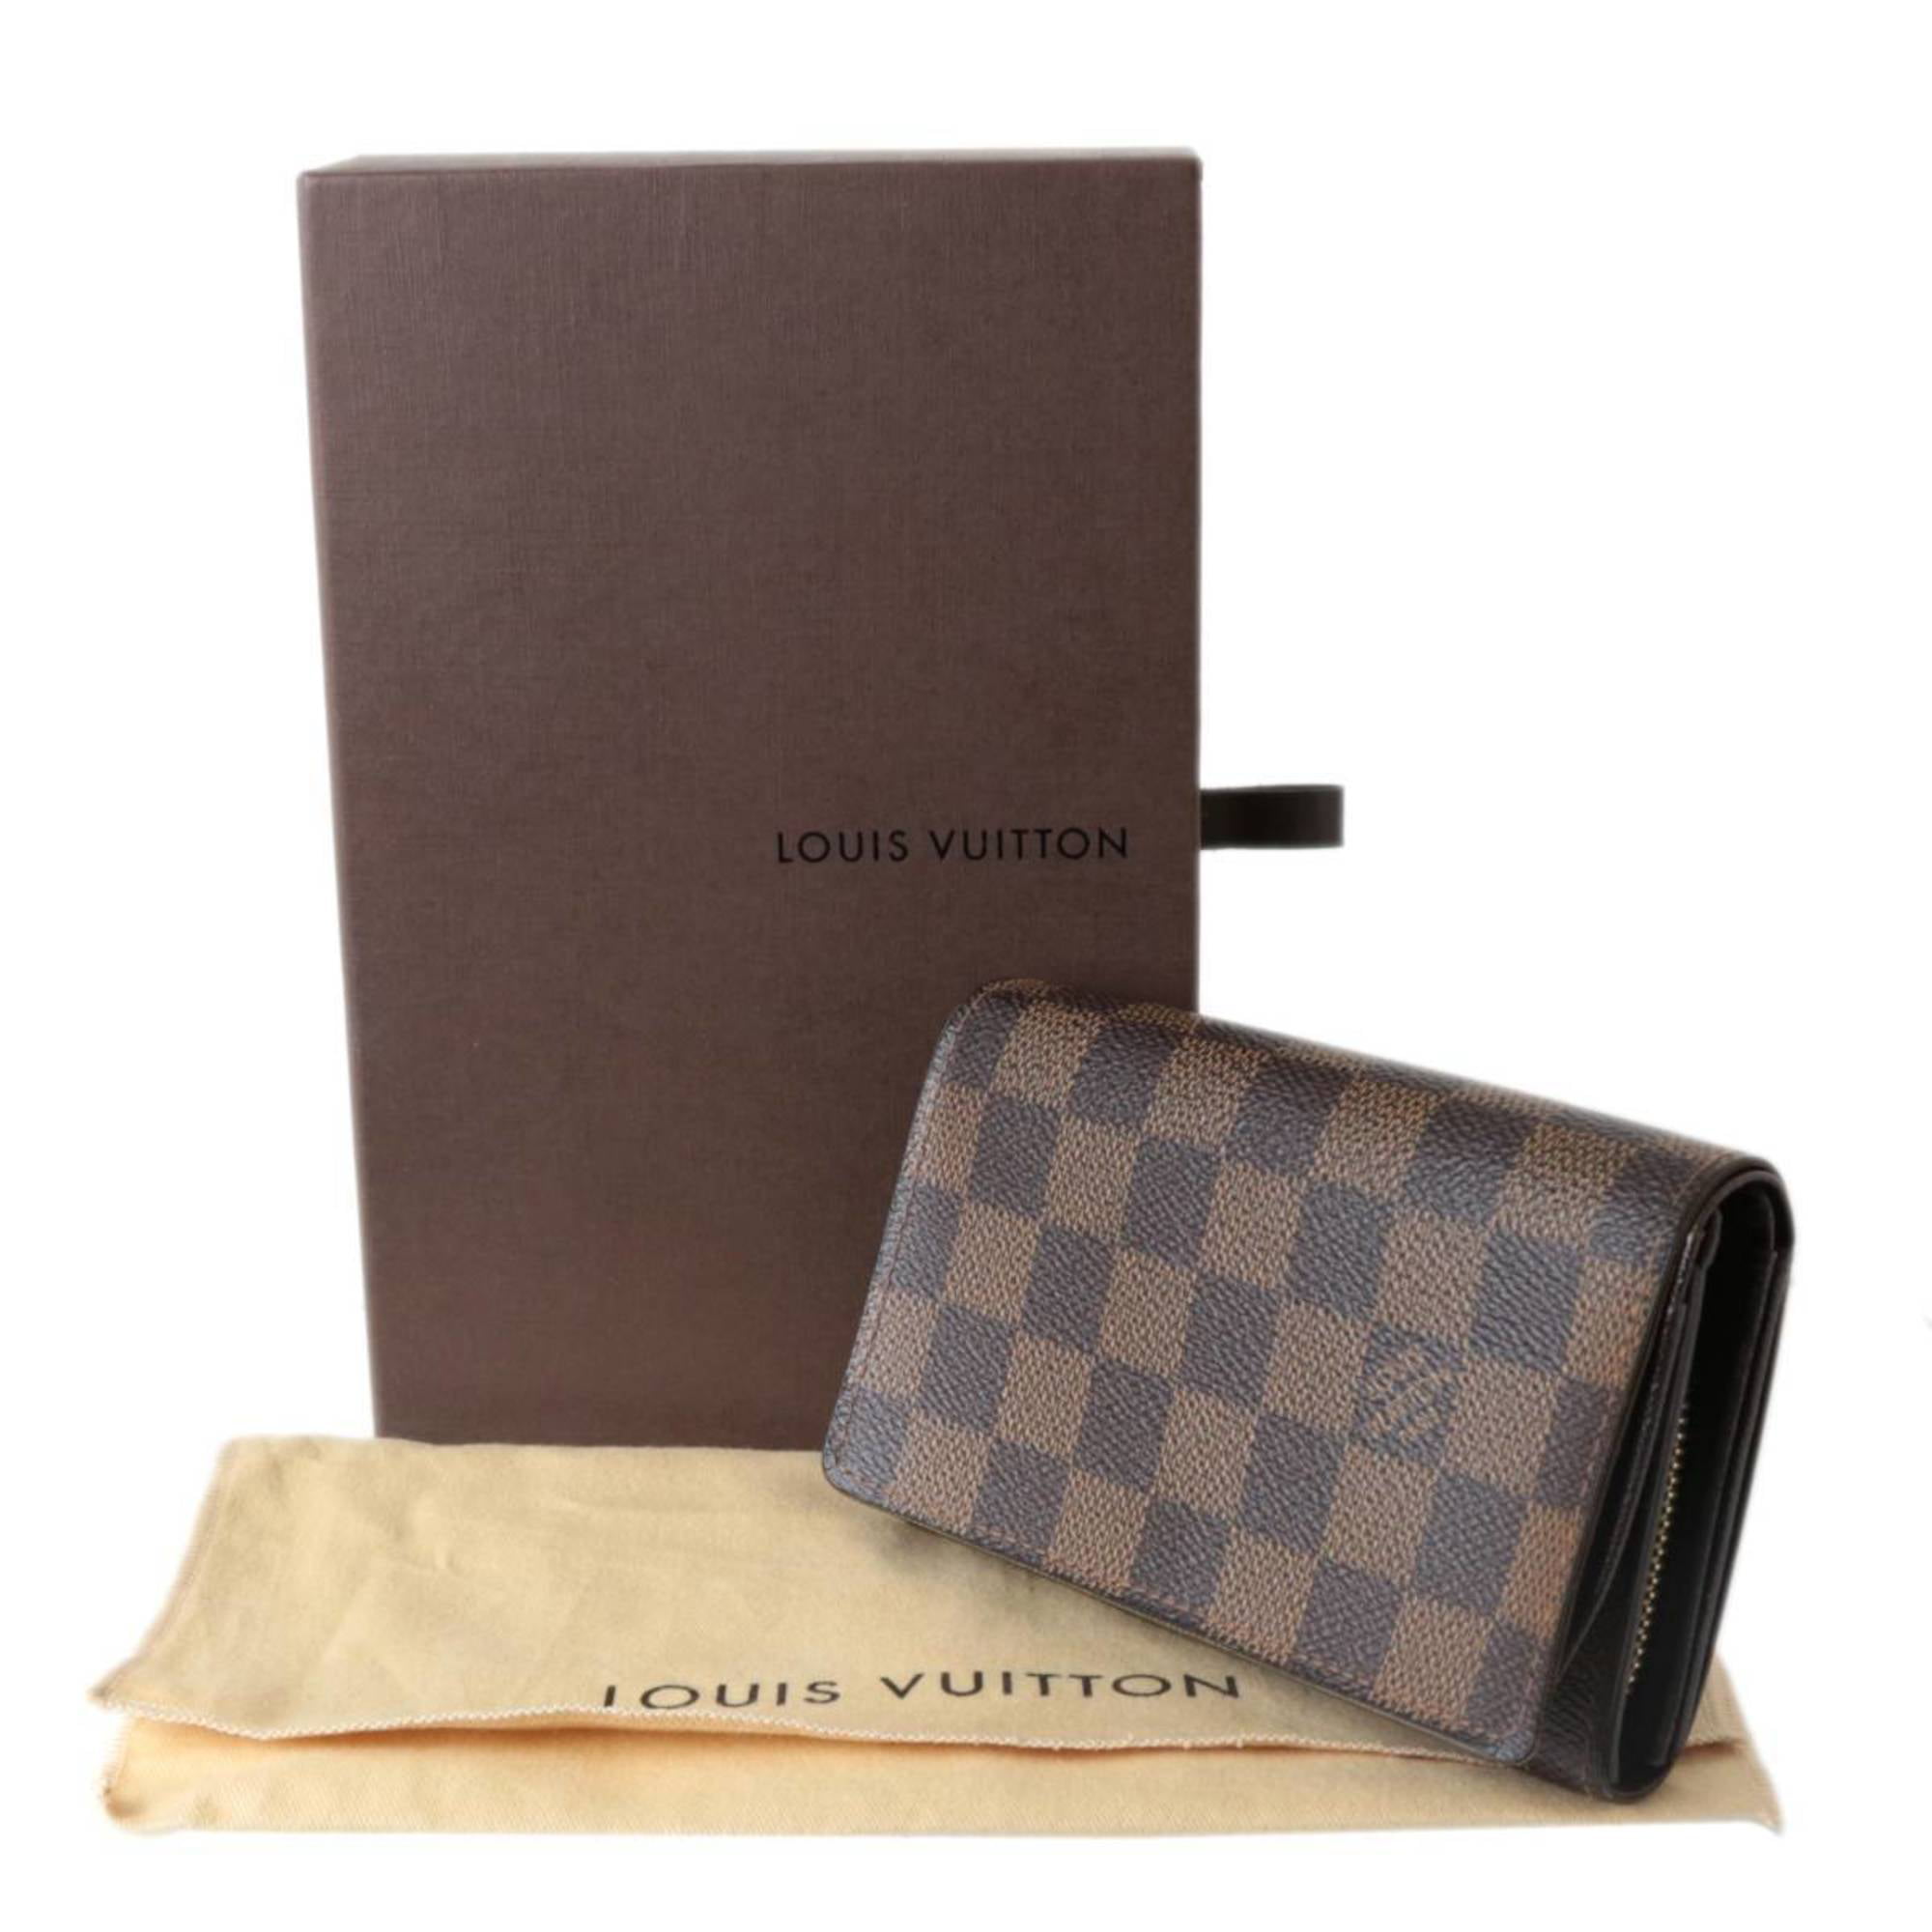 Authenticated Used LOUIS VUITTON/Louis Vuitton Portefeuille Tresor